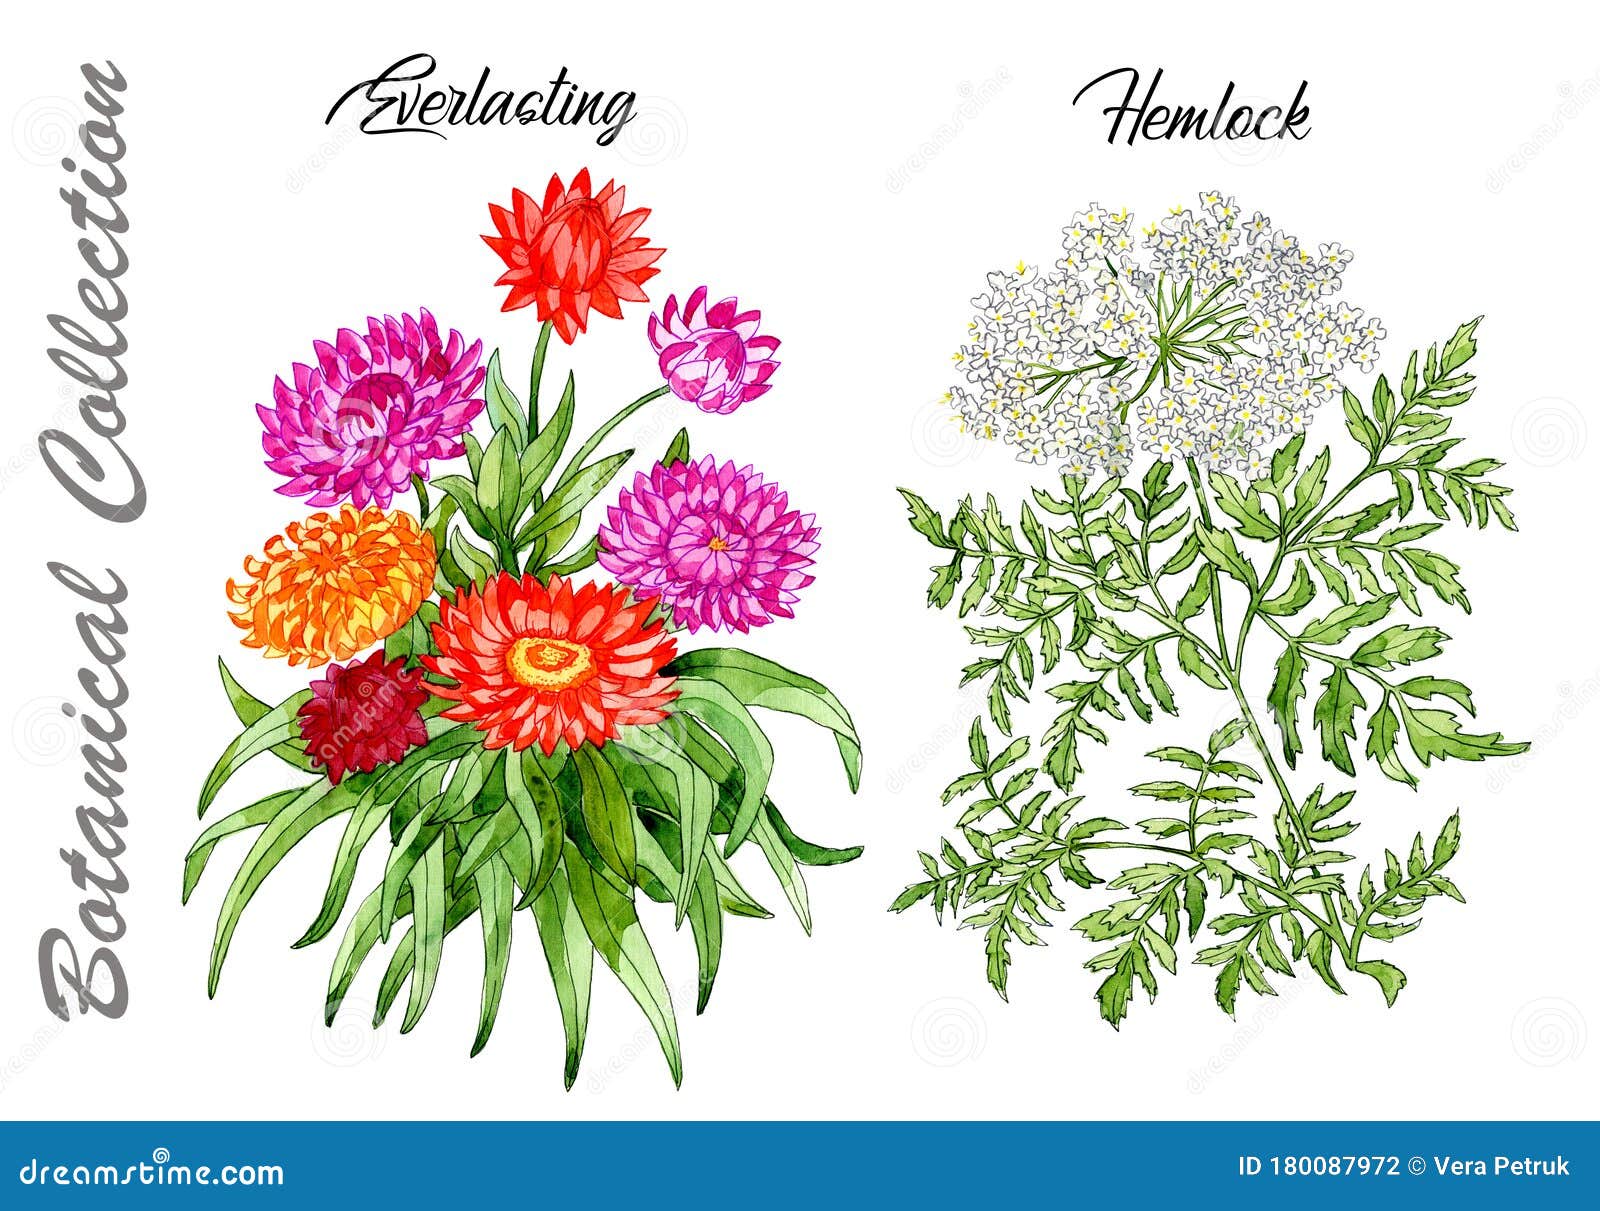 Everlasting Flowers Stock Illustrations – 295 Everlasting Flowers